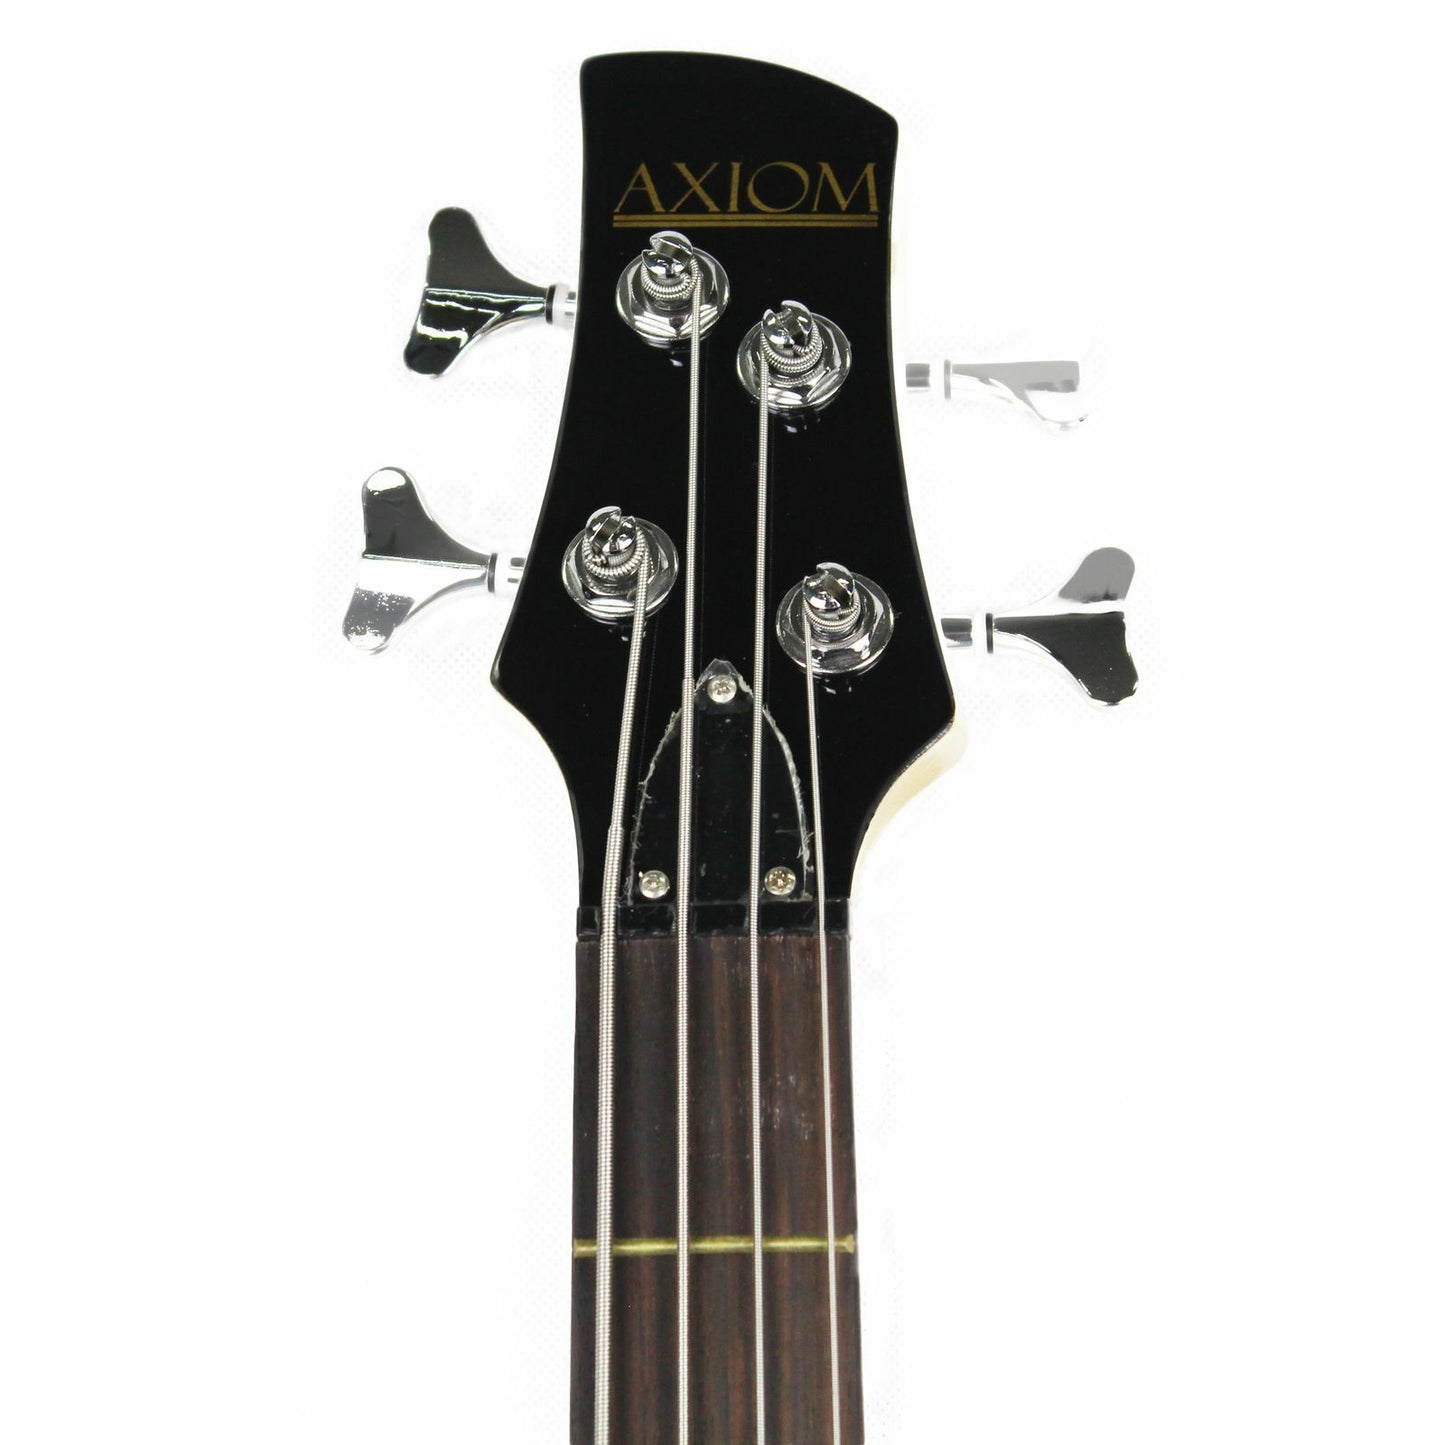 Axiom Defender Bass Guitar - Black